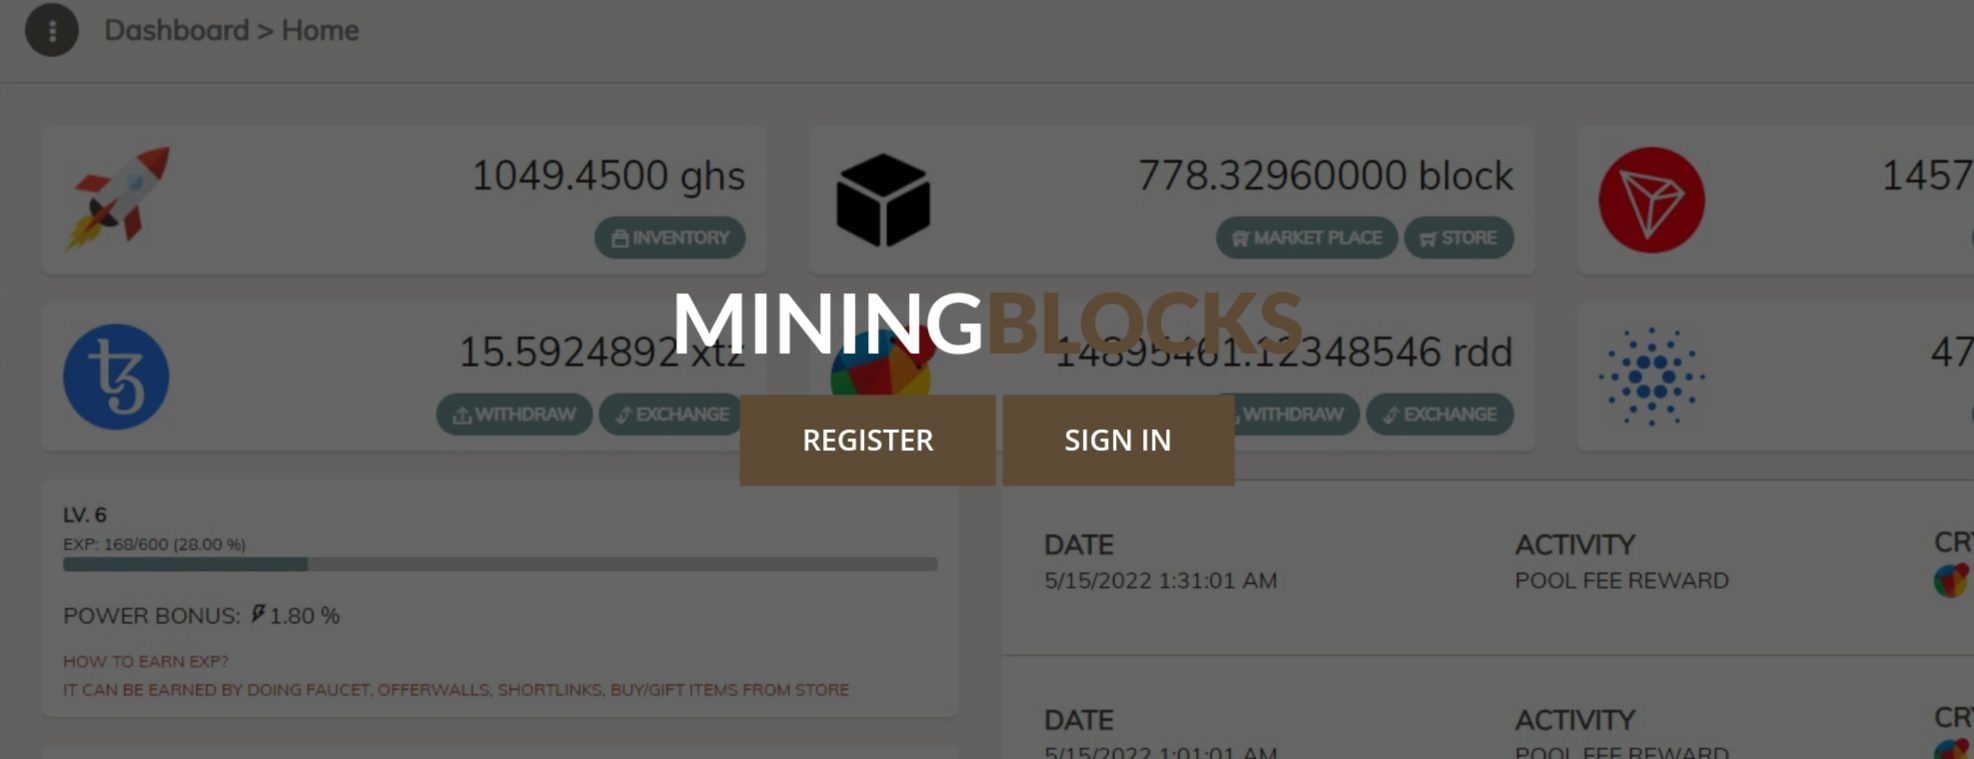 Mining Blocks сайт